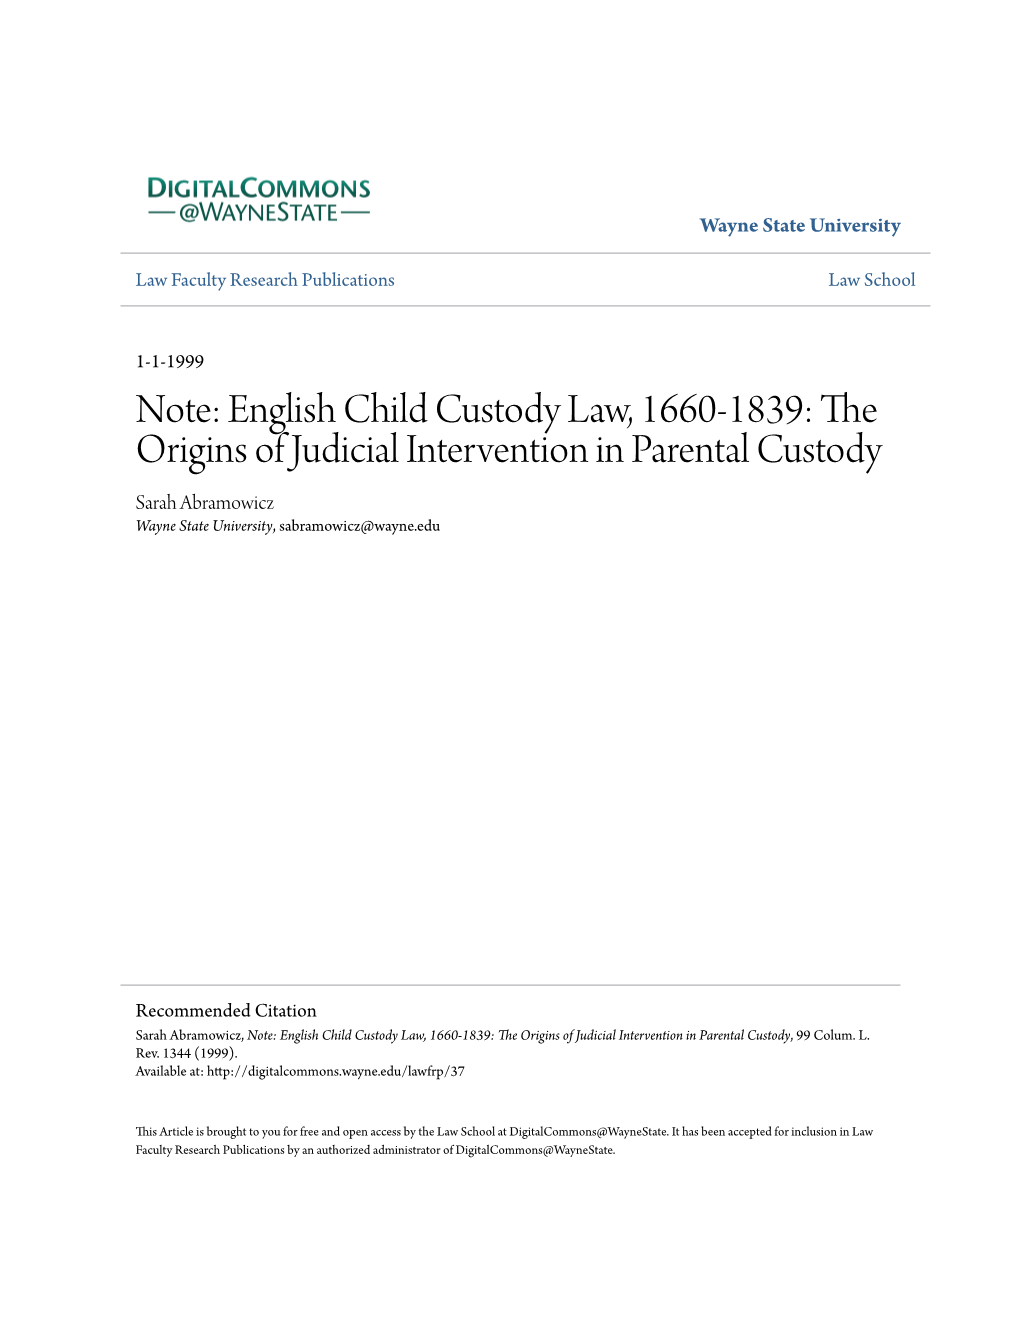 Note: English Child Custody Law, 1660-1839: the Origins of Judicial Intervention in Parental Custody Sarah Abramowicz Wayne State University, Sabramowicz@Wayne.Edu